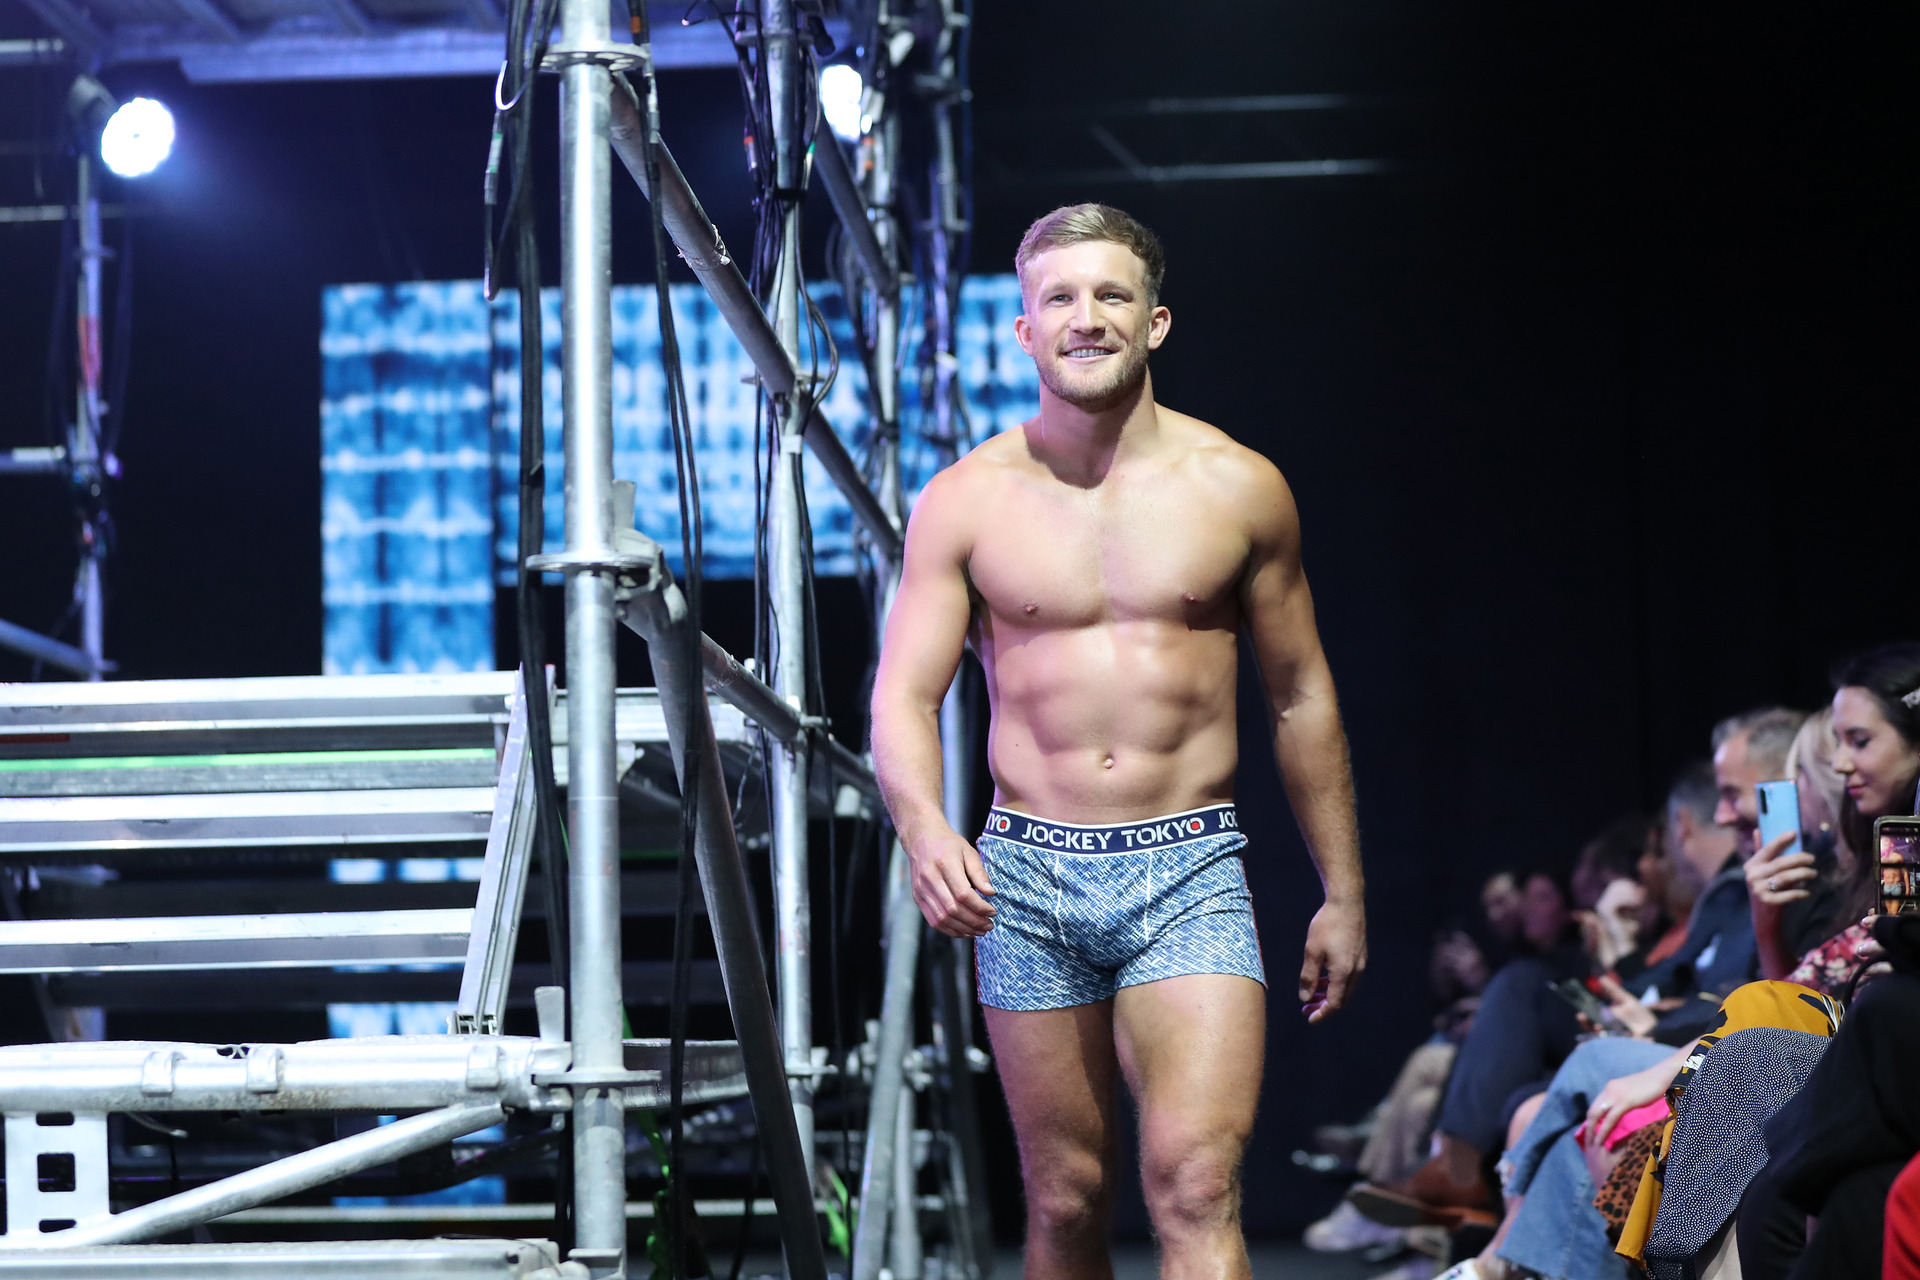 See Jockey Underwear showcase with Athletes at Zealand Fashion